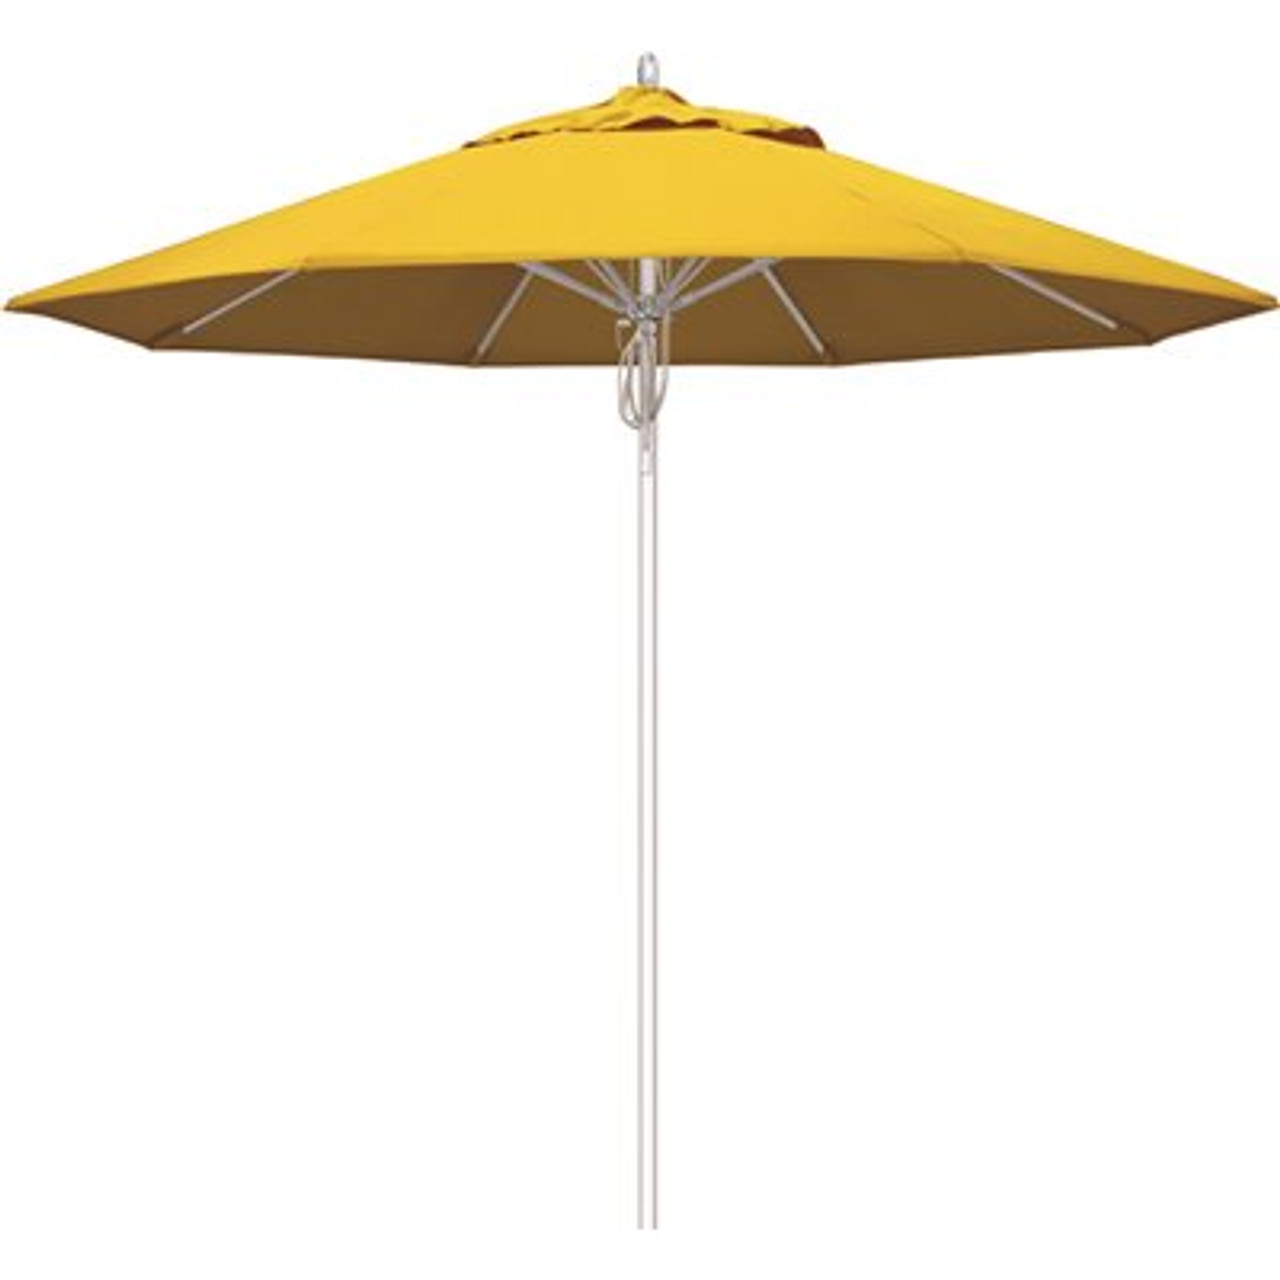 9 ft. Silver Aluminum Commercial Fiberglass Ribs Market Patio Umbrella and Pulley Lift in Sunflower Yellow Sunbrella